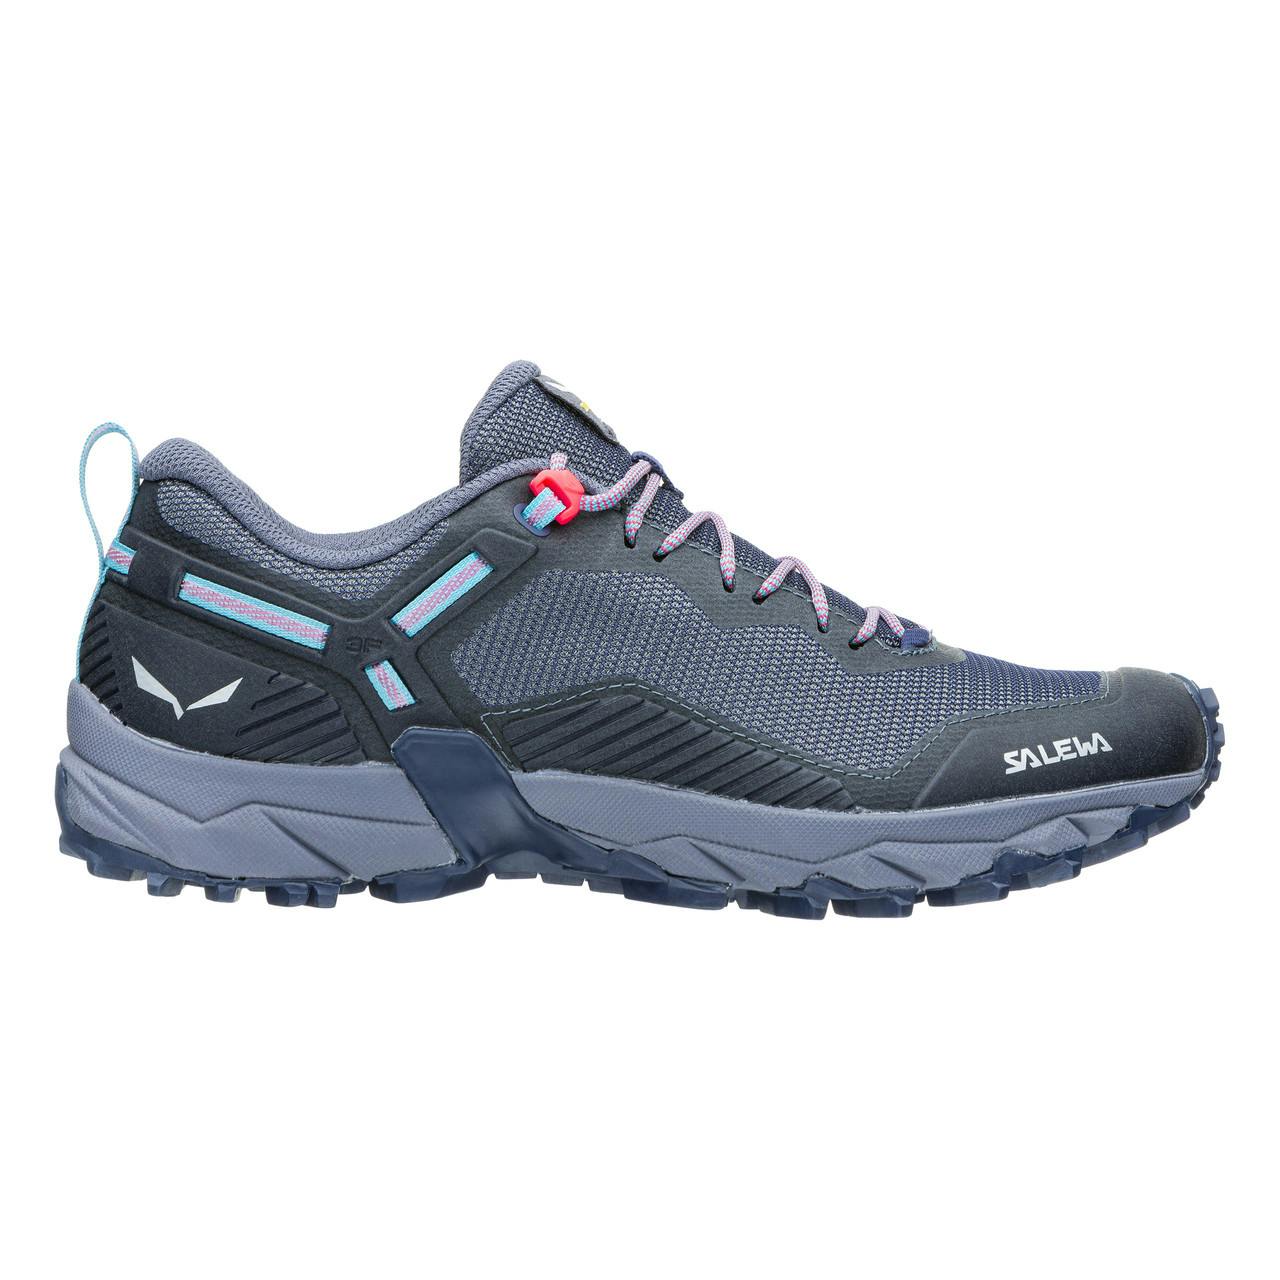 Ultra Train 3 Light Trail Shoes Navy Blazer/Maui Blue